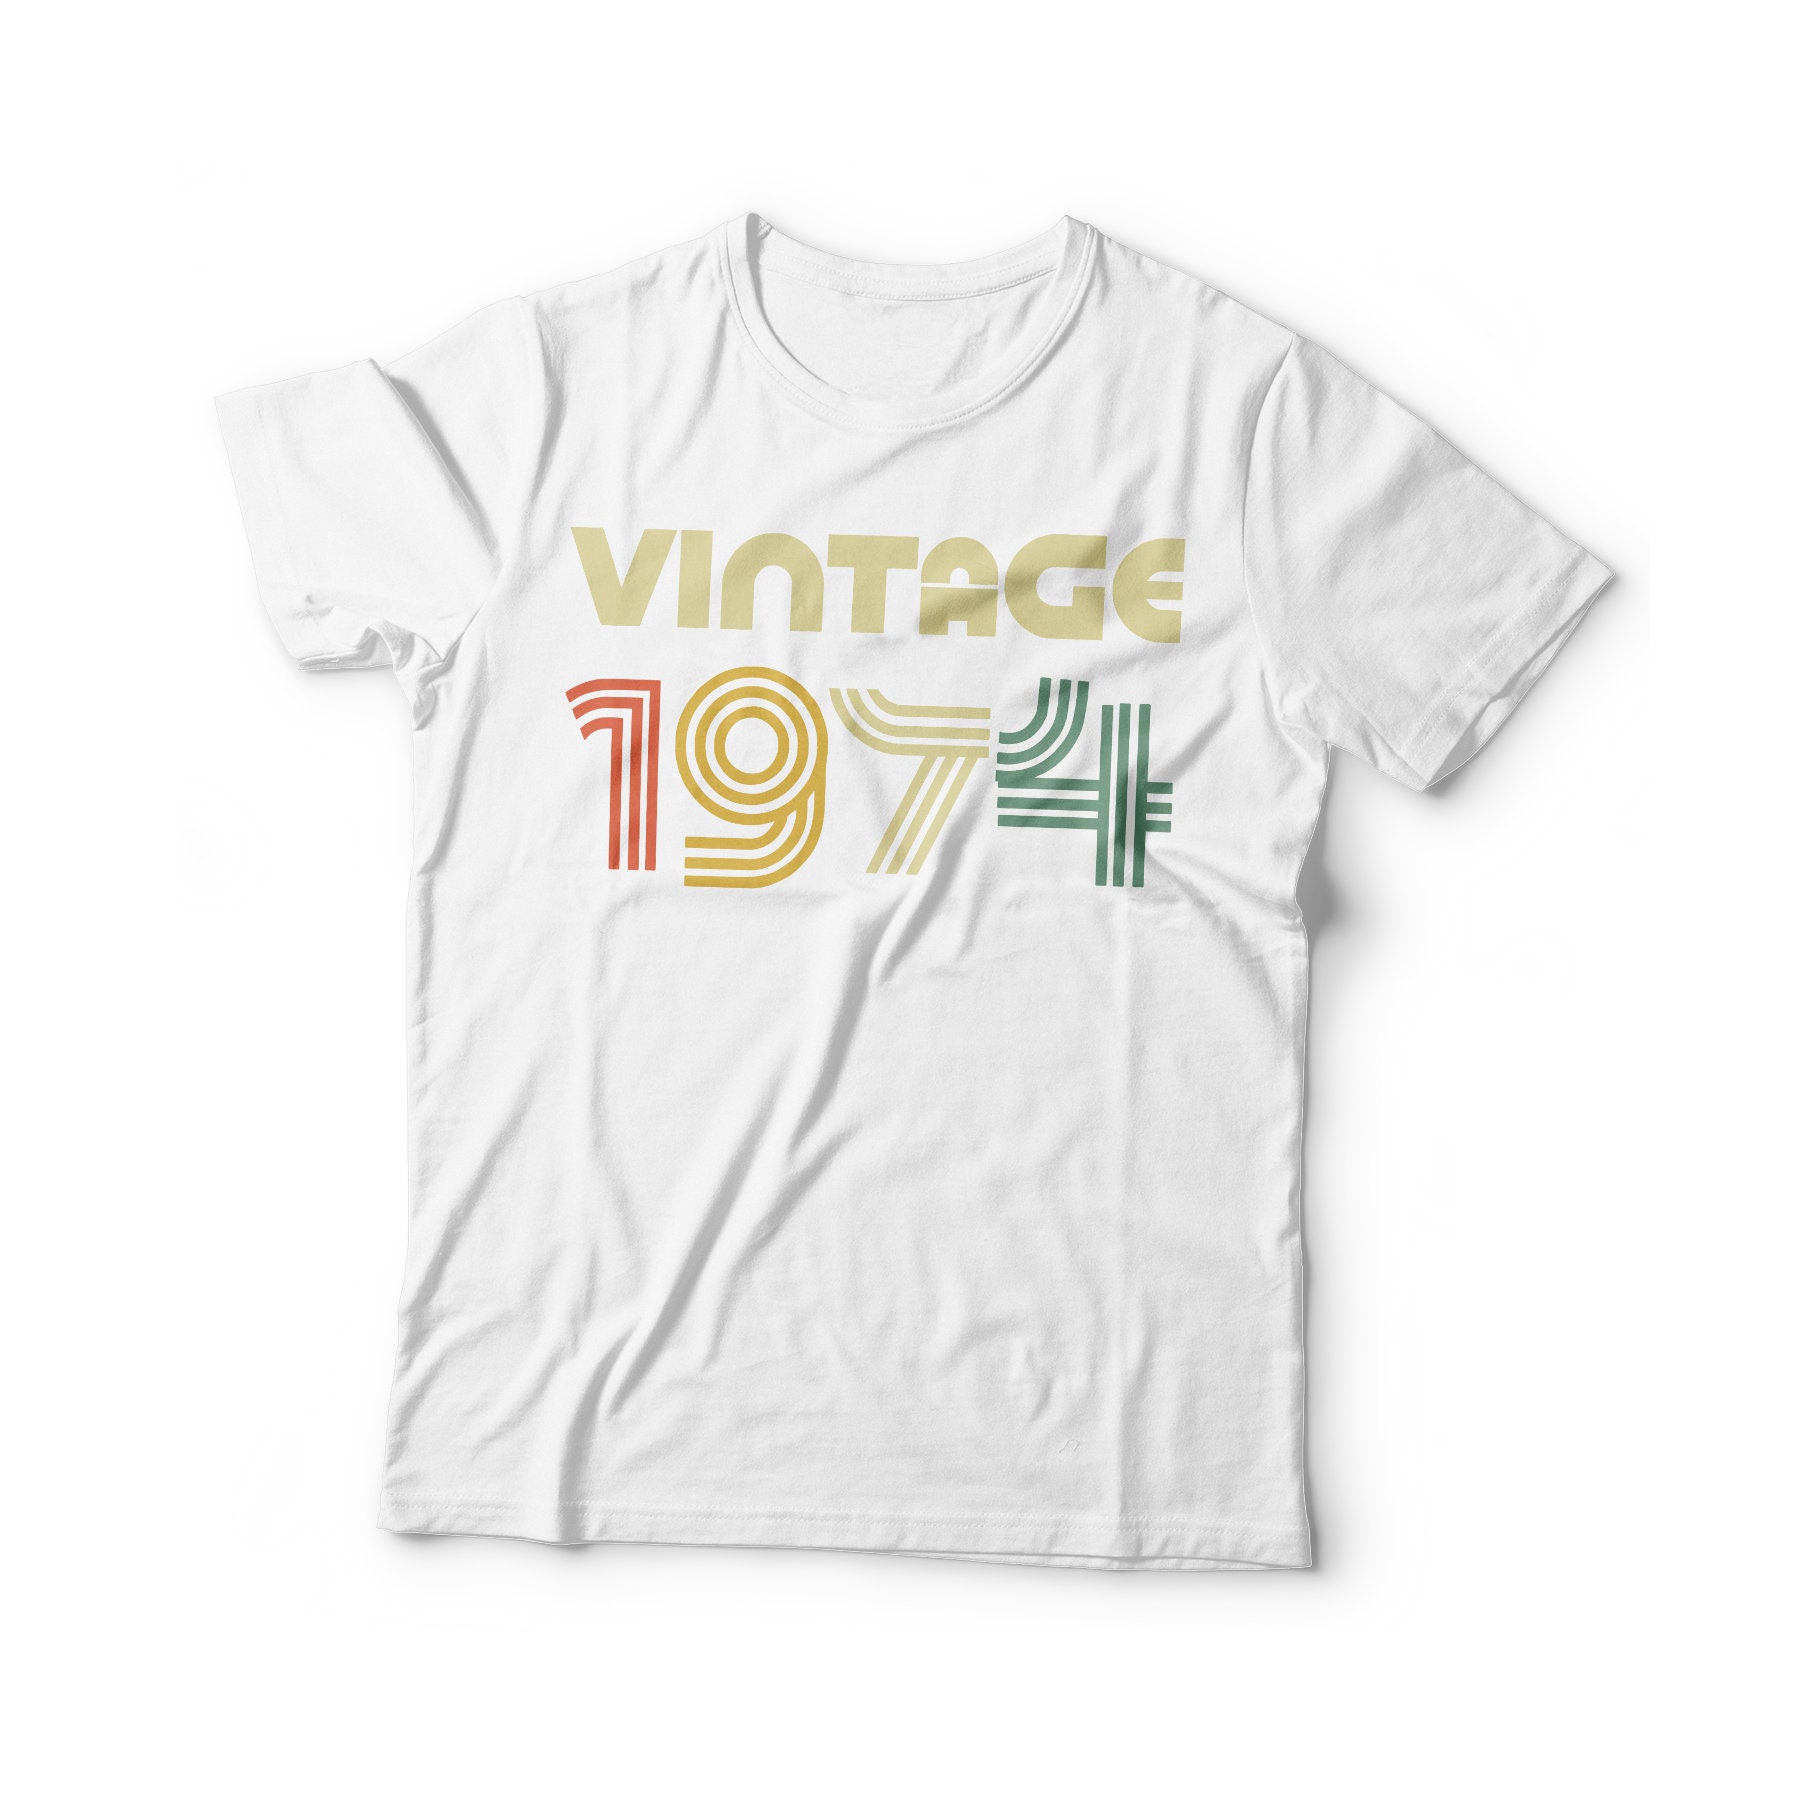 Vintage 1974 T-Shirt Unisex Women Men Funny Retro Font 46th | Etsy